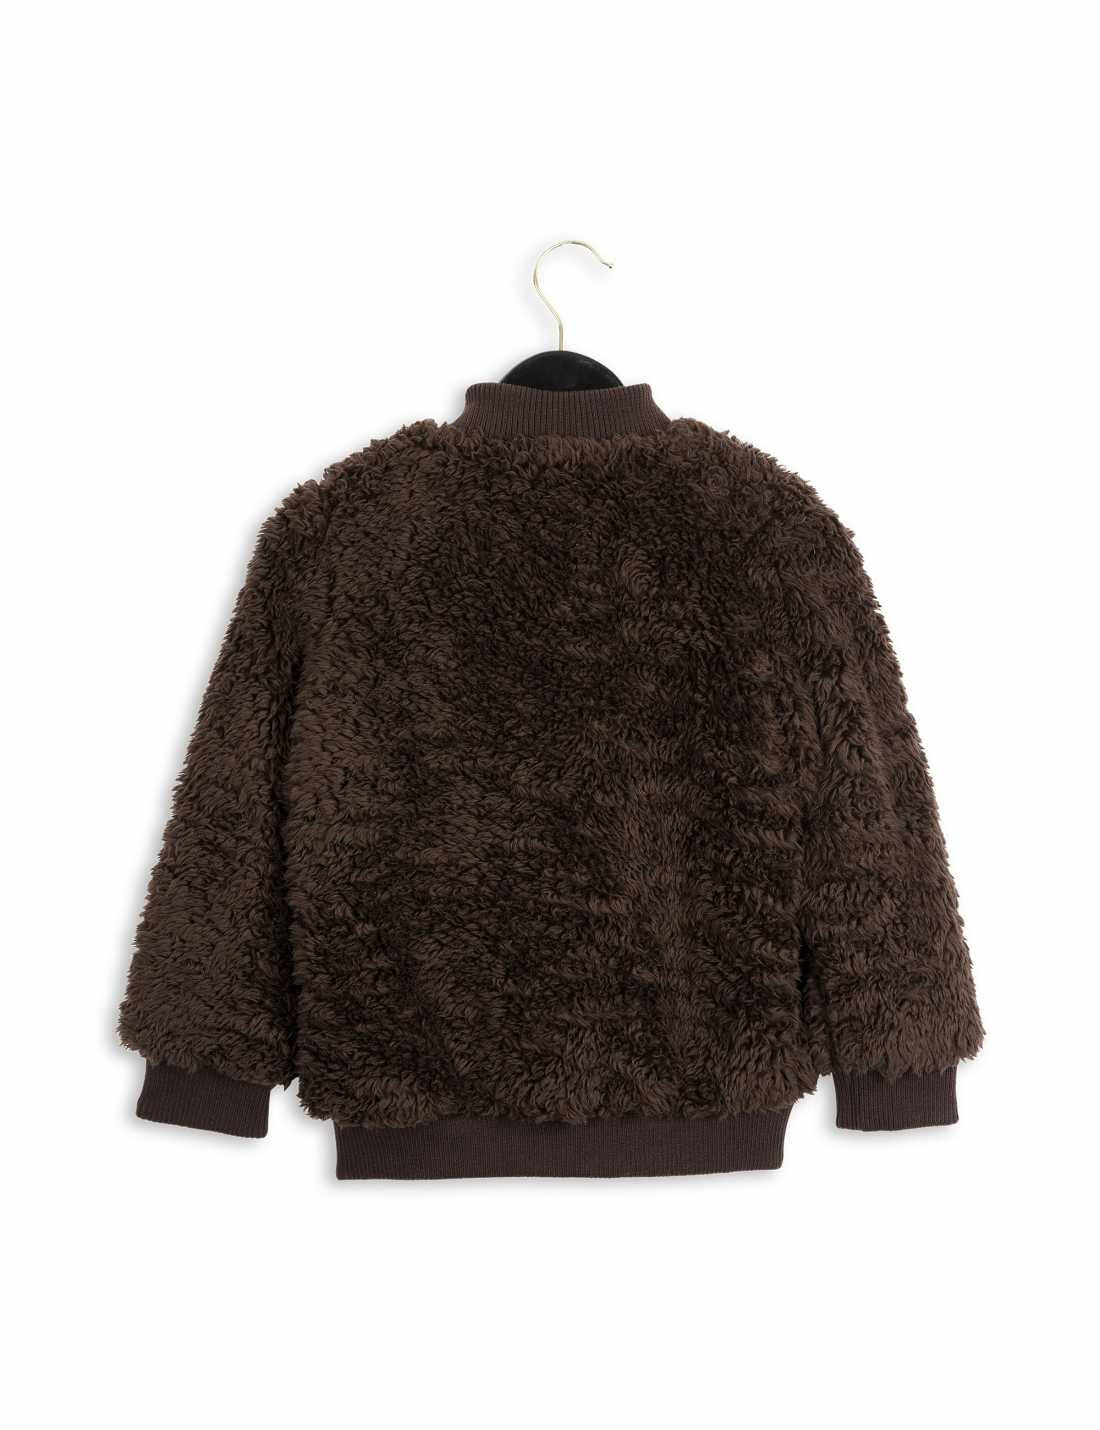 Girls Dark Brown Fur Ribbed Cuffs Coat - CÉMAROSE | Children's Fashion Store - 2